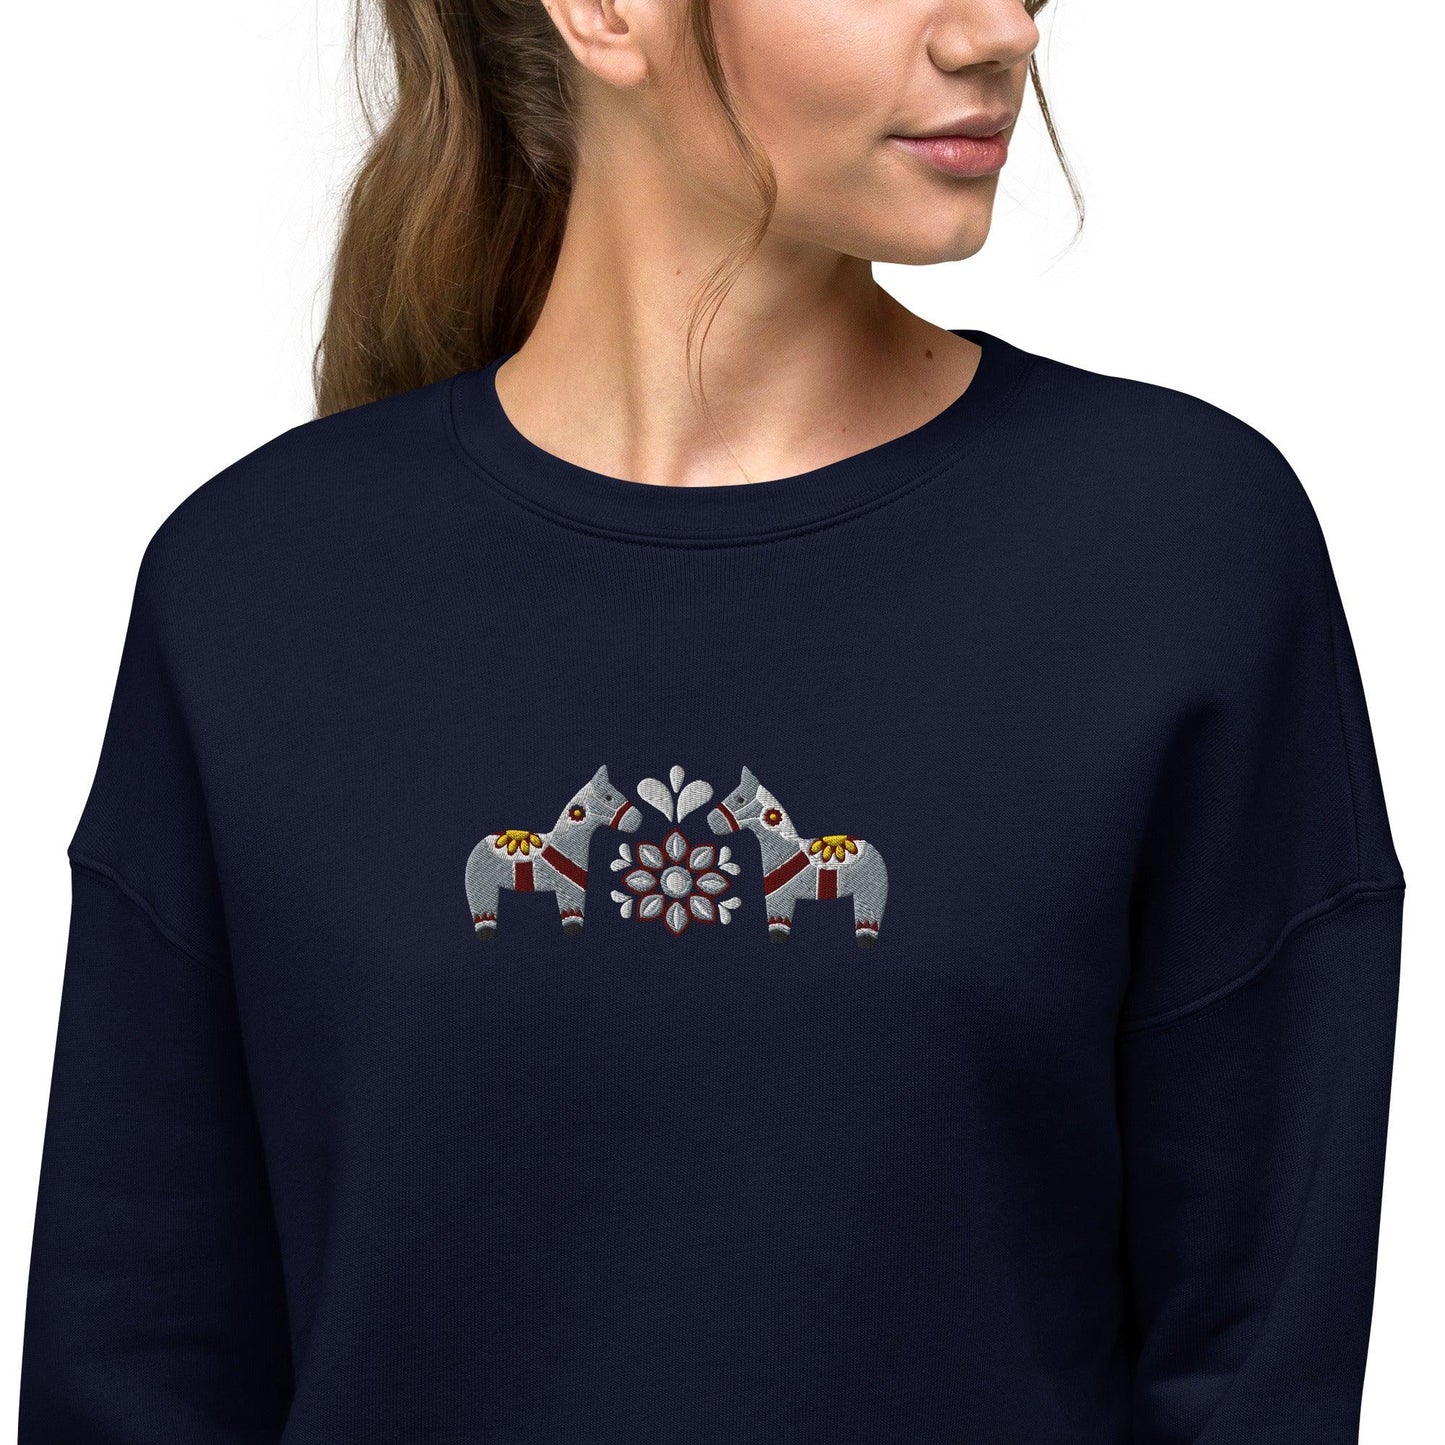 Swedish Gray Dala Horse Cropped Sweatshirt - Embroidered - The Global Wanderer